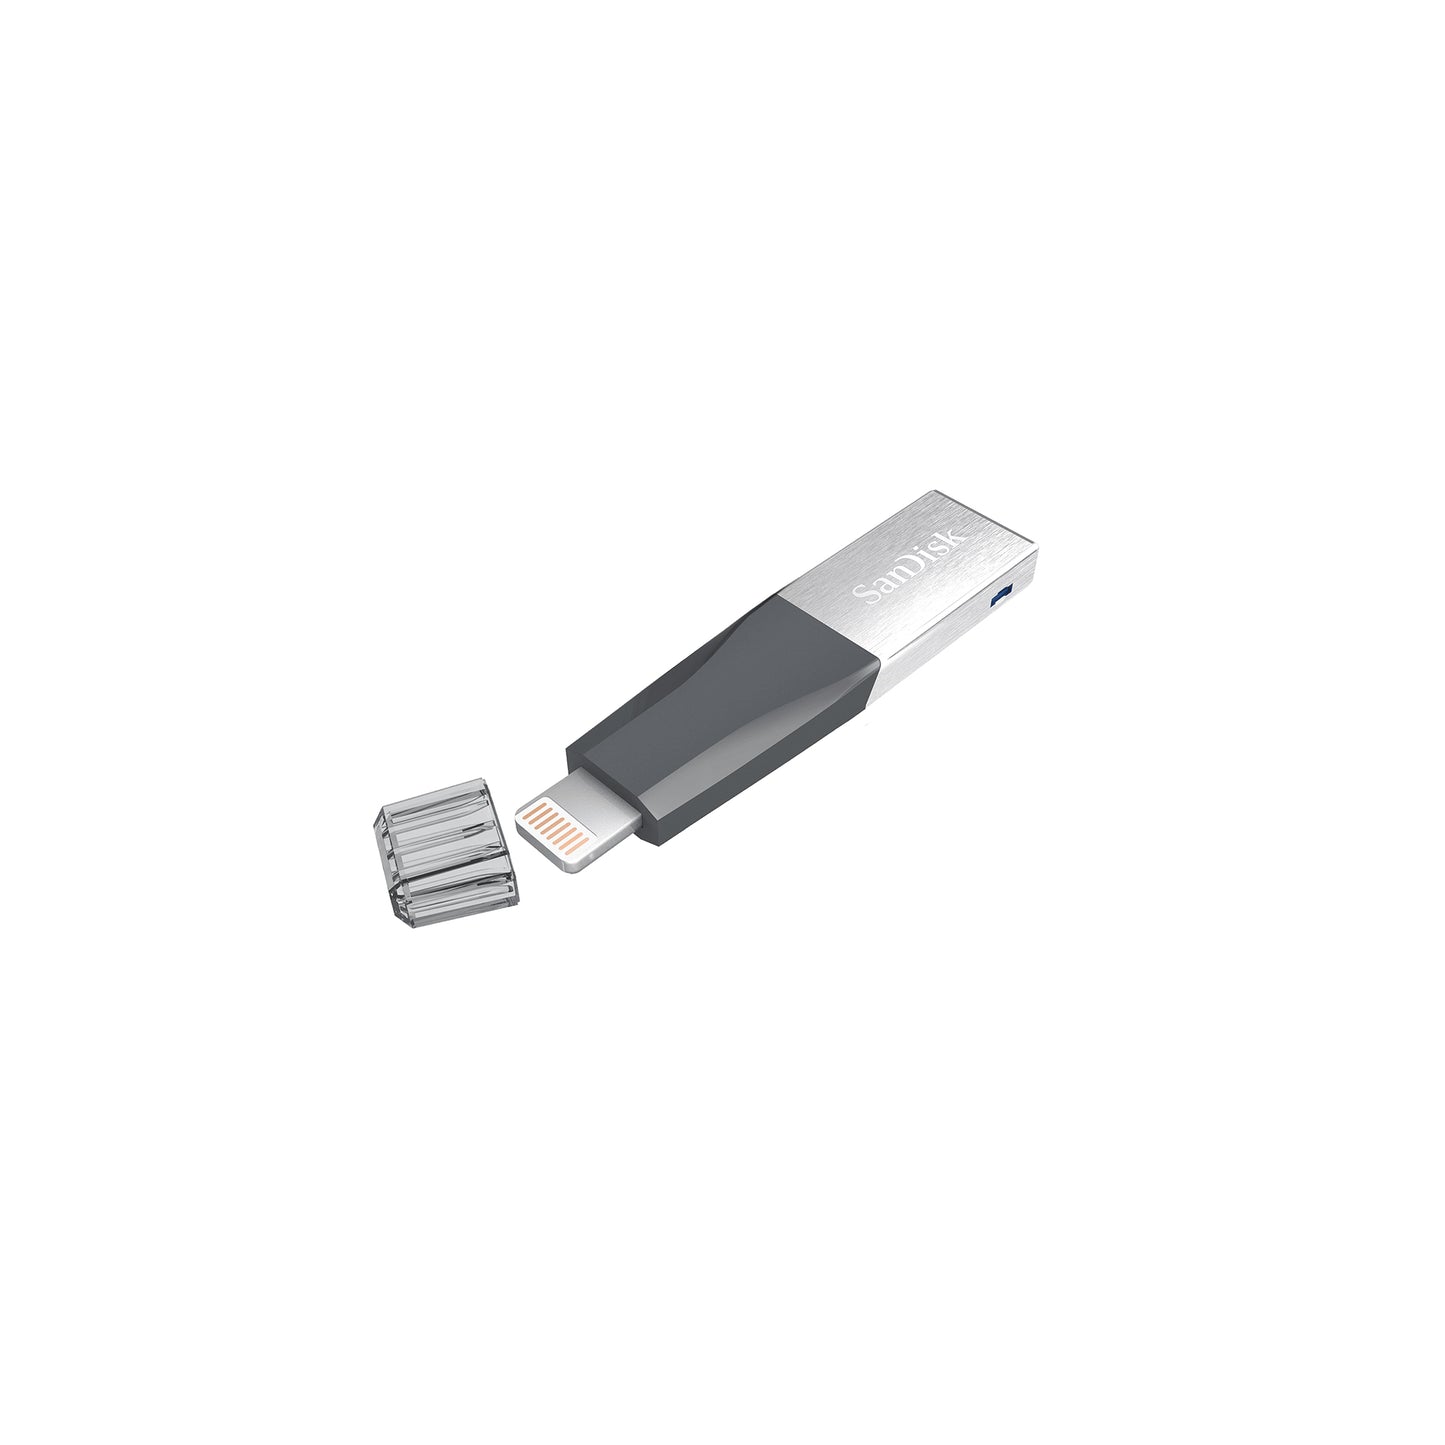 SANDISK iXpand Mini Flash Drive 16GB - Silver